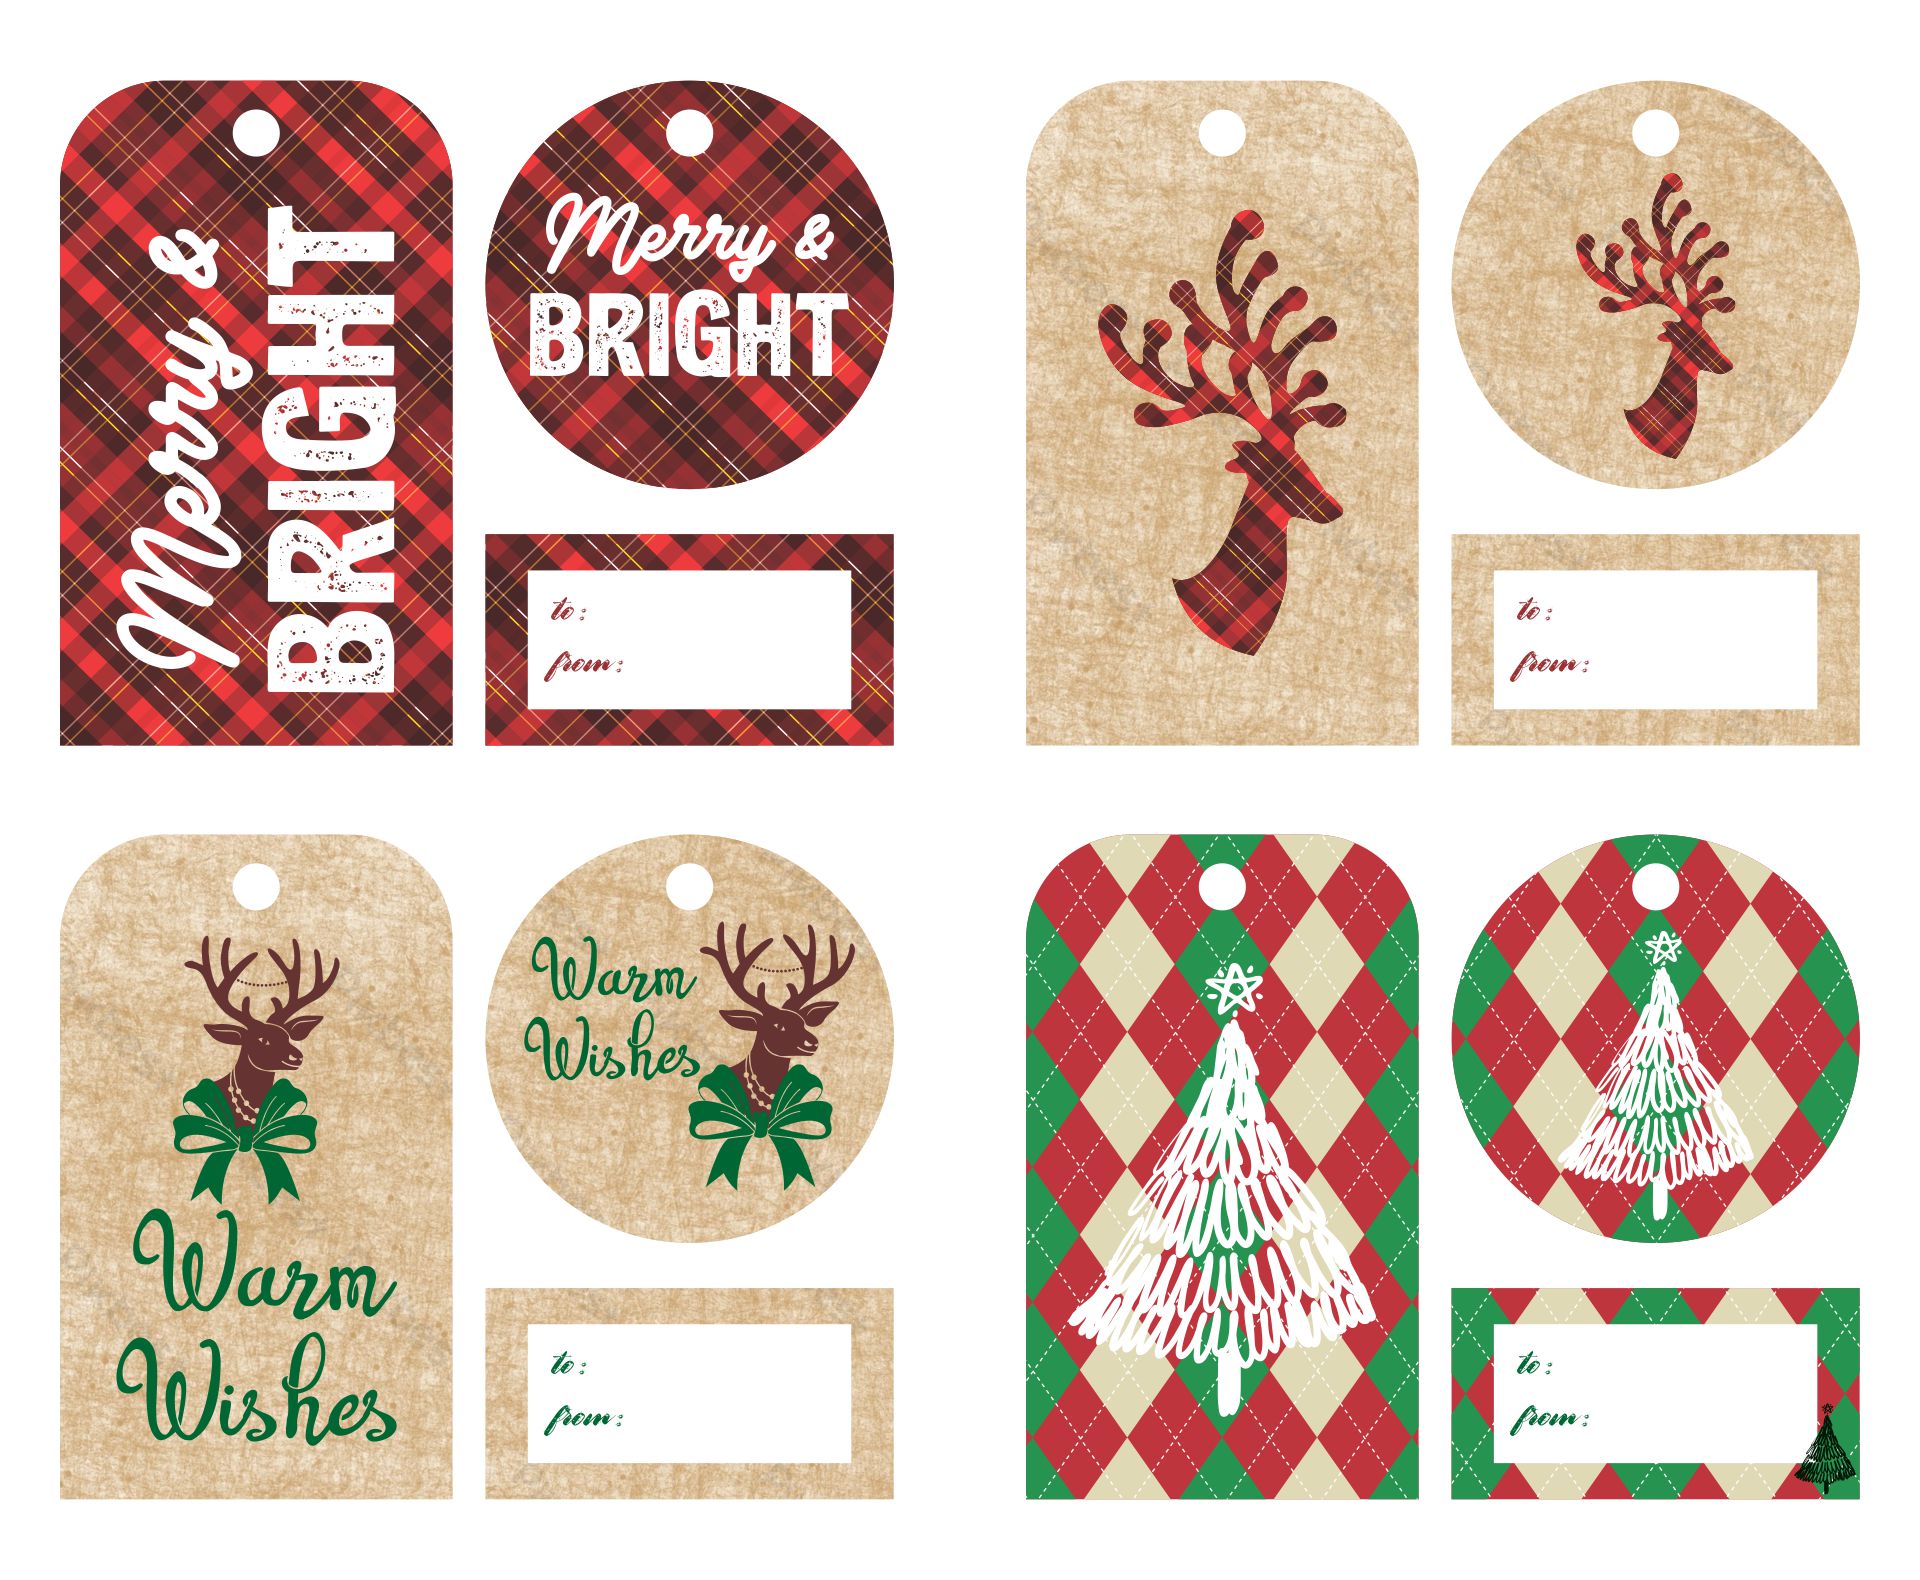  Christmas Printables On Pinterest